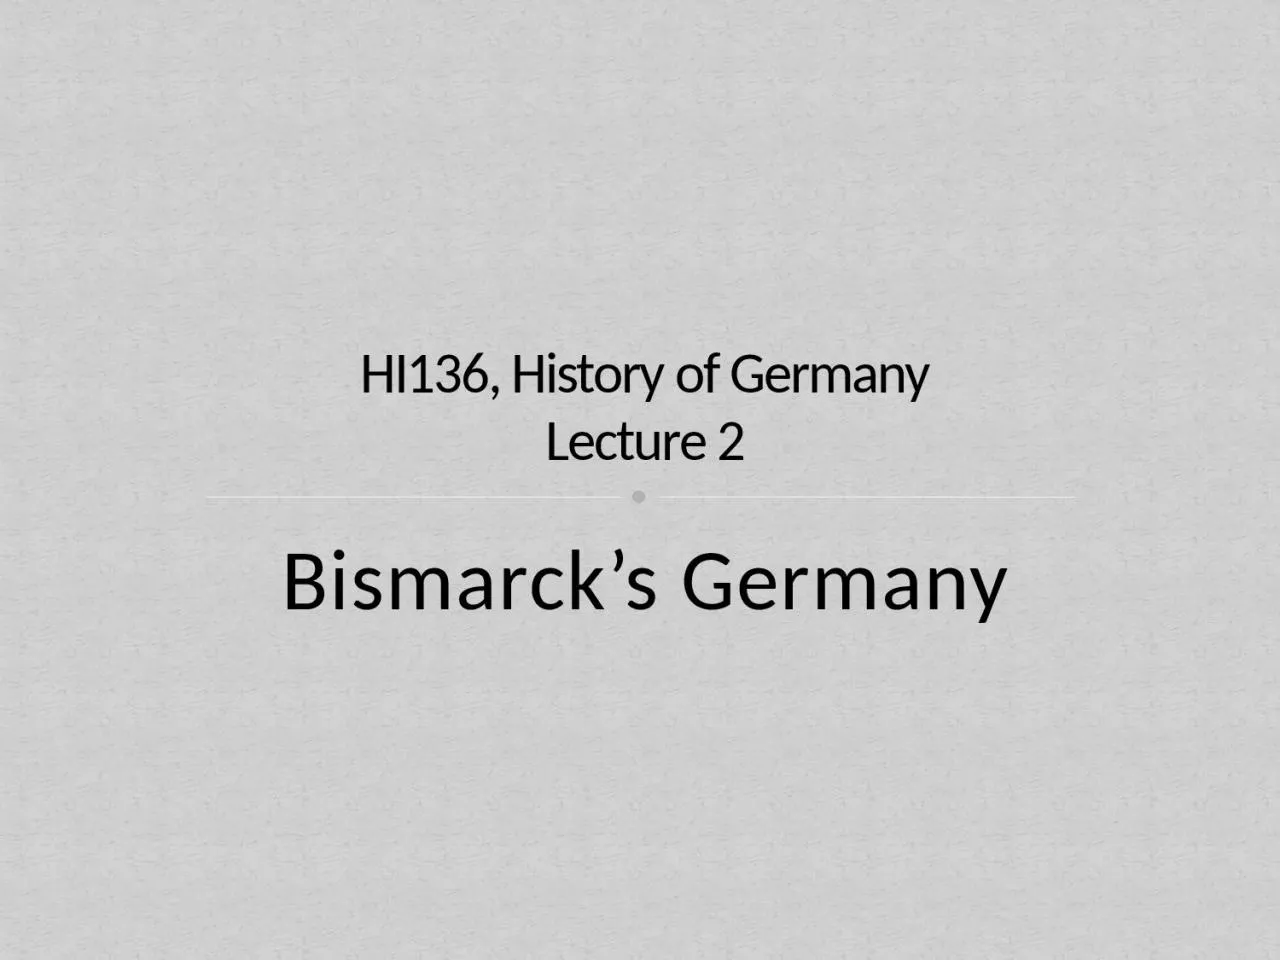 Bismarck’s Germany HI136, History of Germany